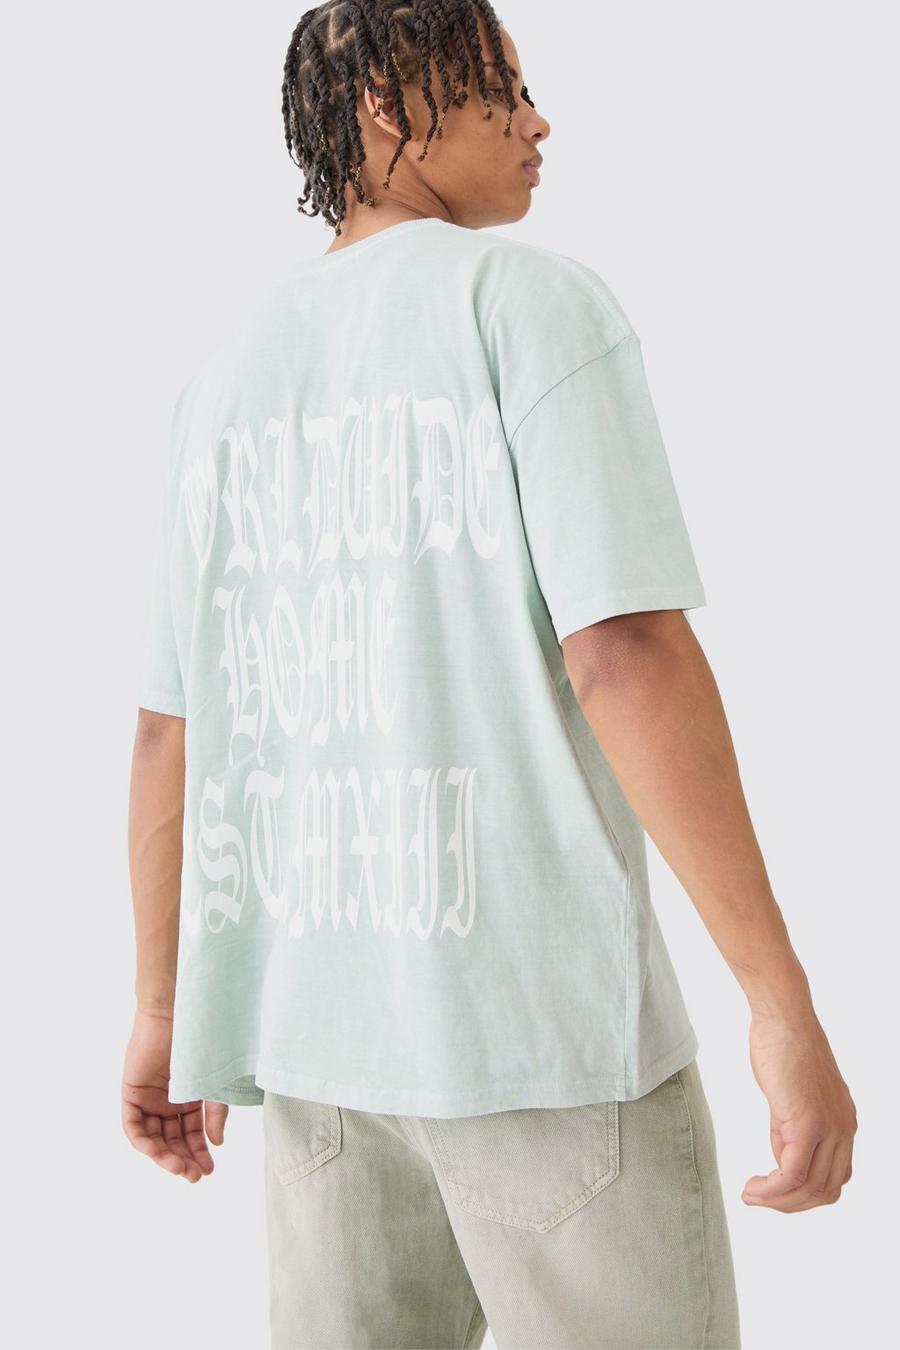 T-shirt oversize sovratinta con testo in caratteri gotici, Sage image number 1